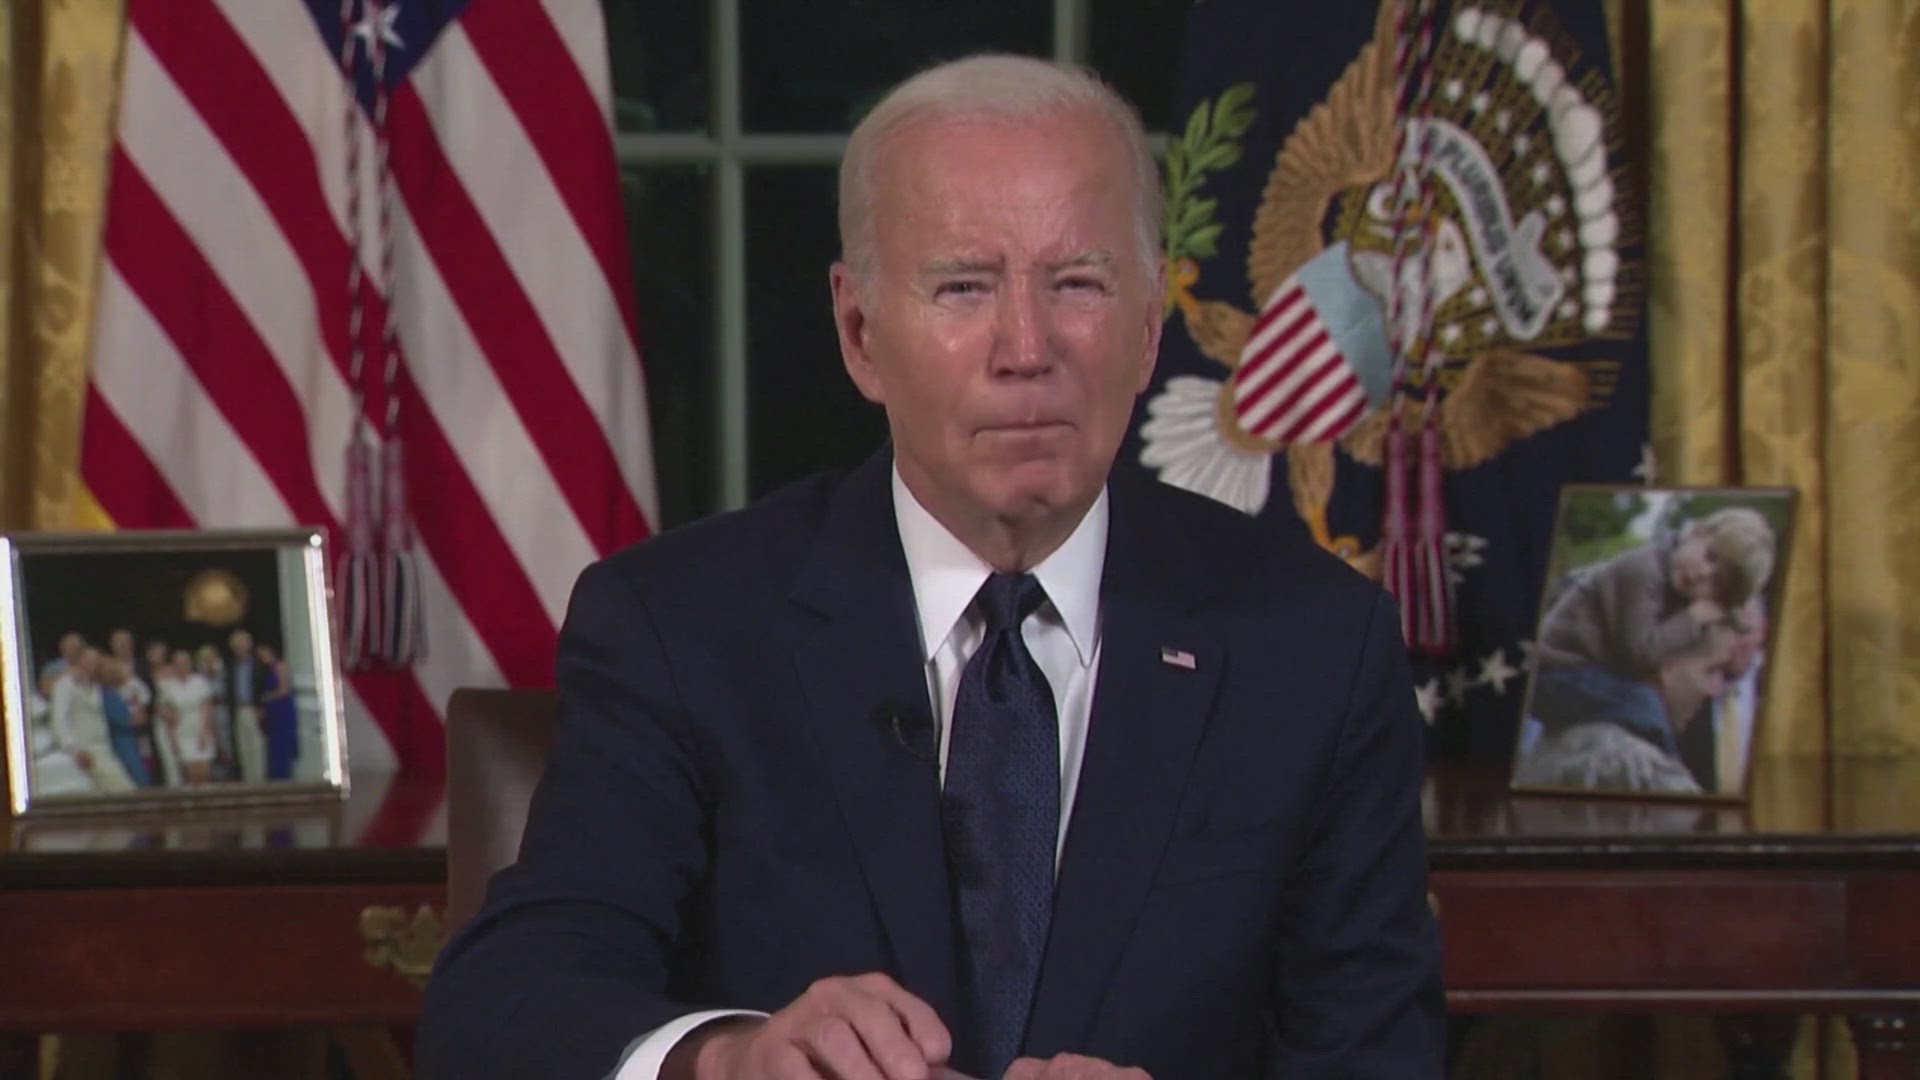 President Joe Biden addressed the nation Thursday night over the conflict in Israel.